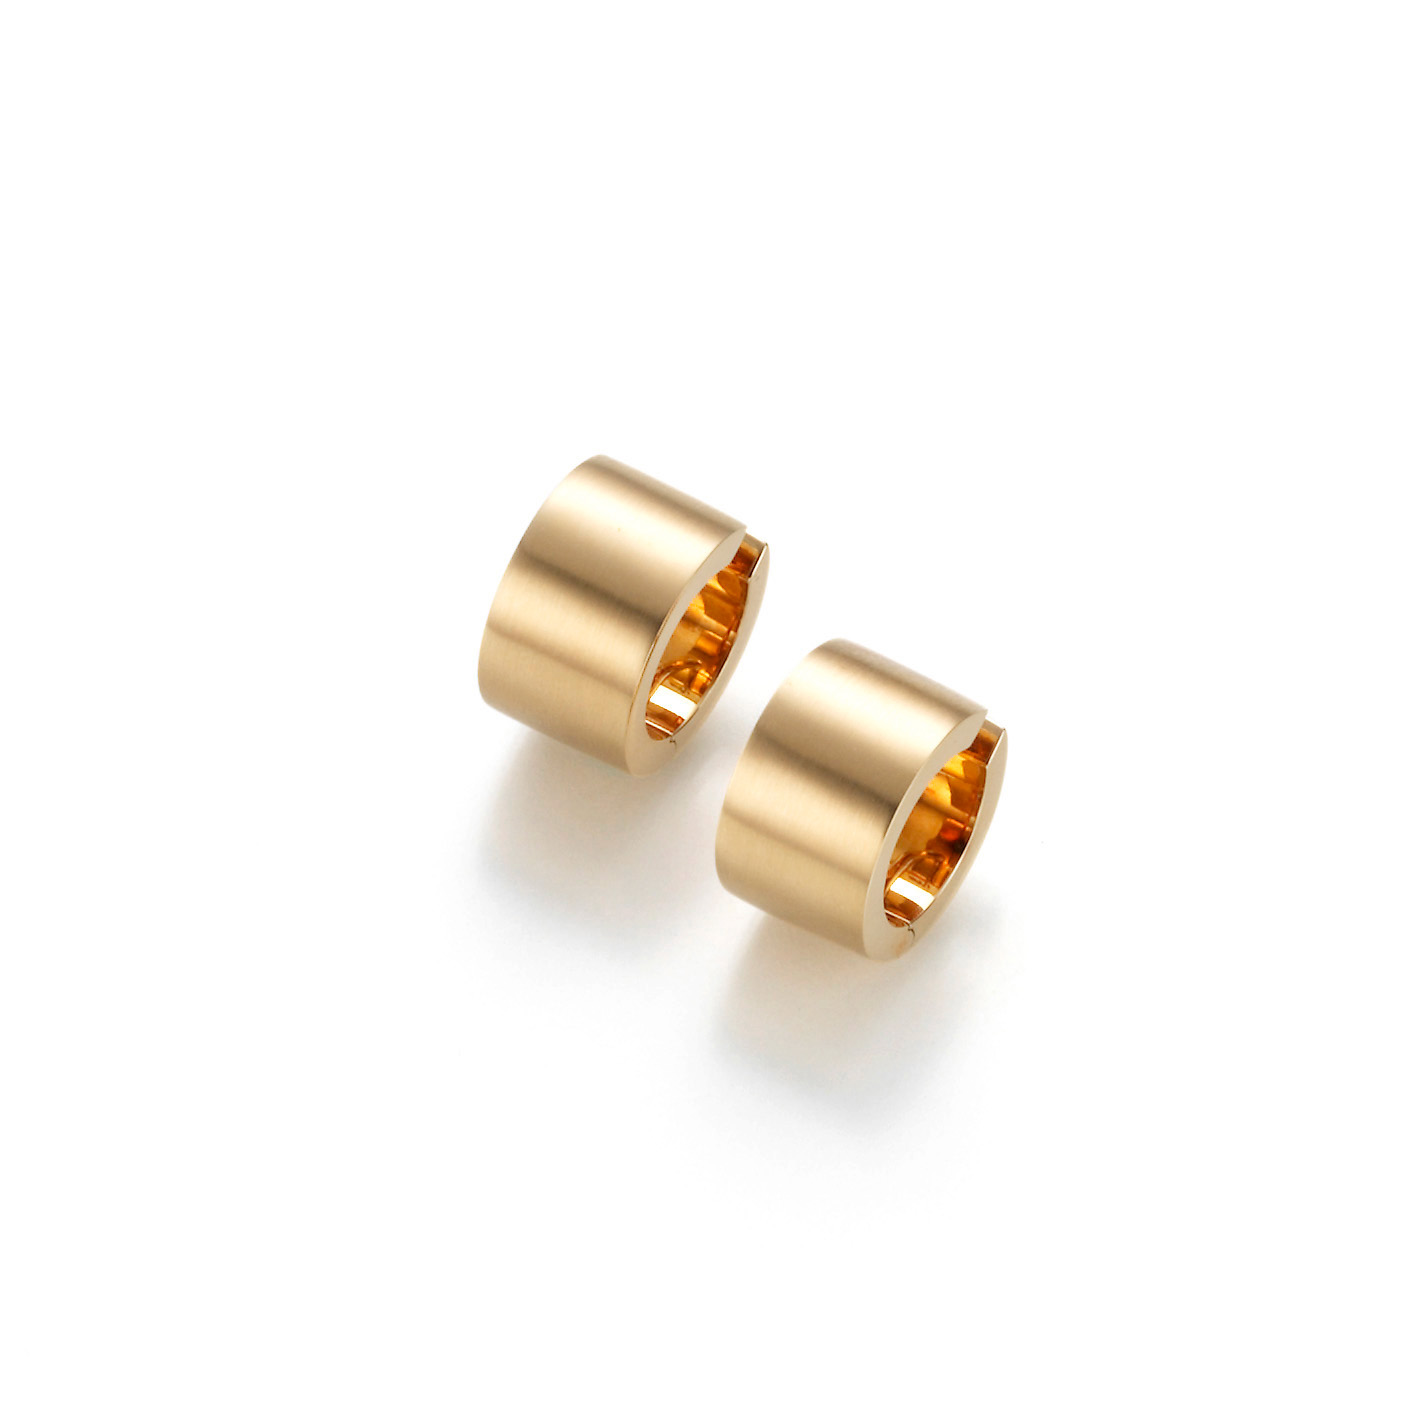 Design gold earrings custom girls sterling silver jewelry supplier